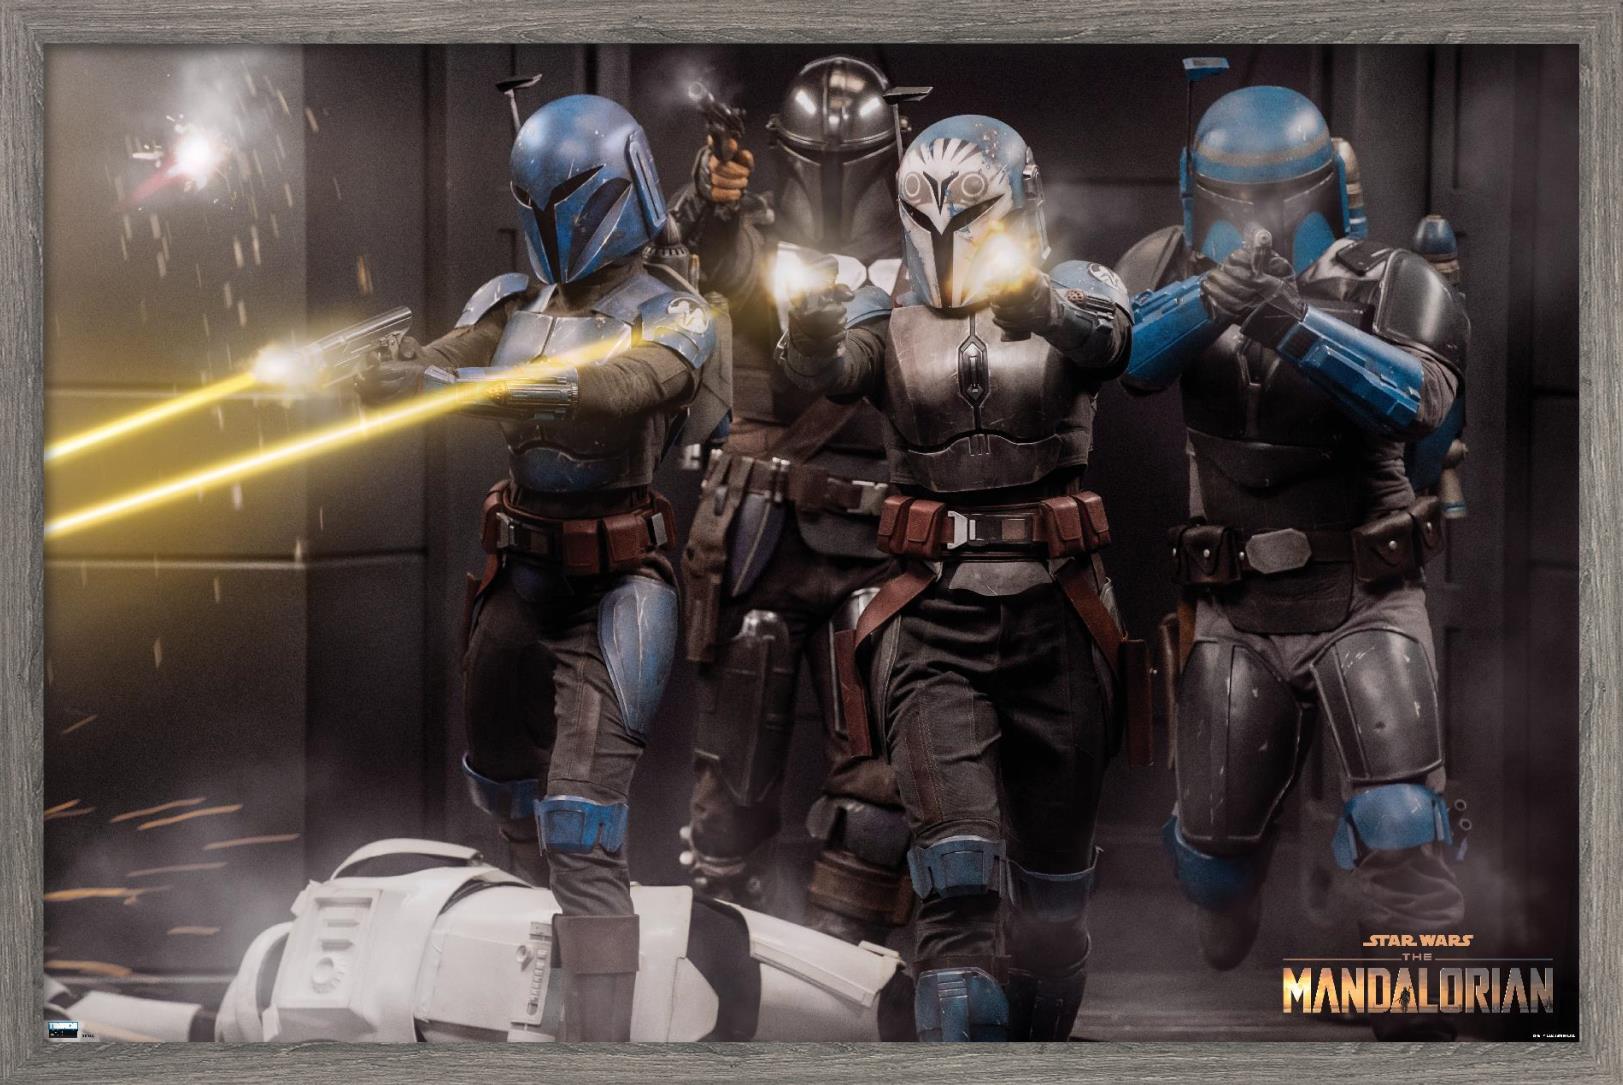 Star Wars: The Mandalorian Season 2 - Battle Group Wall Poster, 14.725" x 22.375", Framed - image 1 of 5